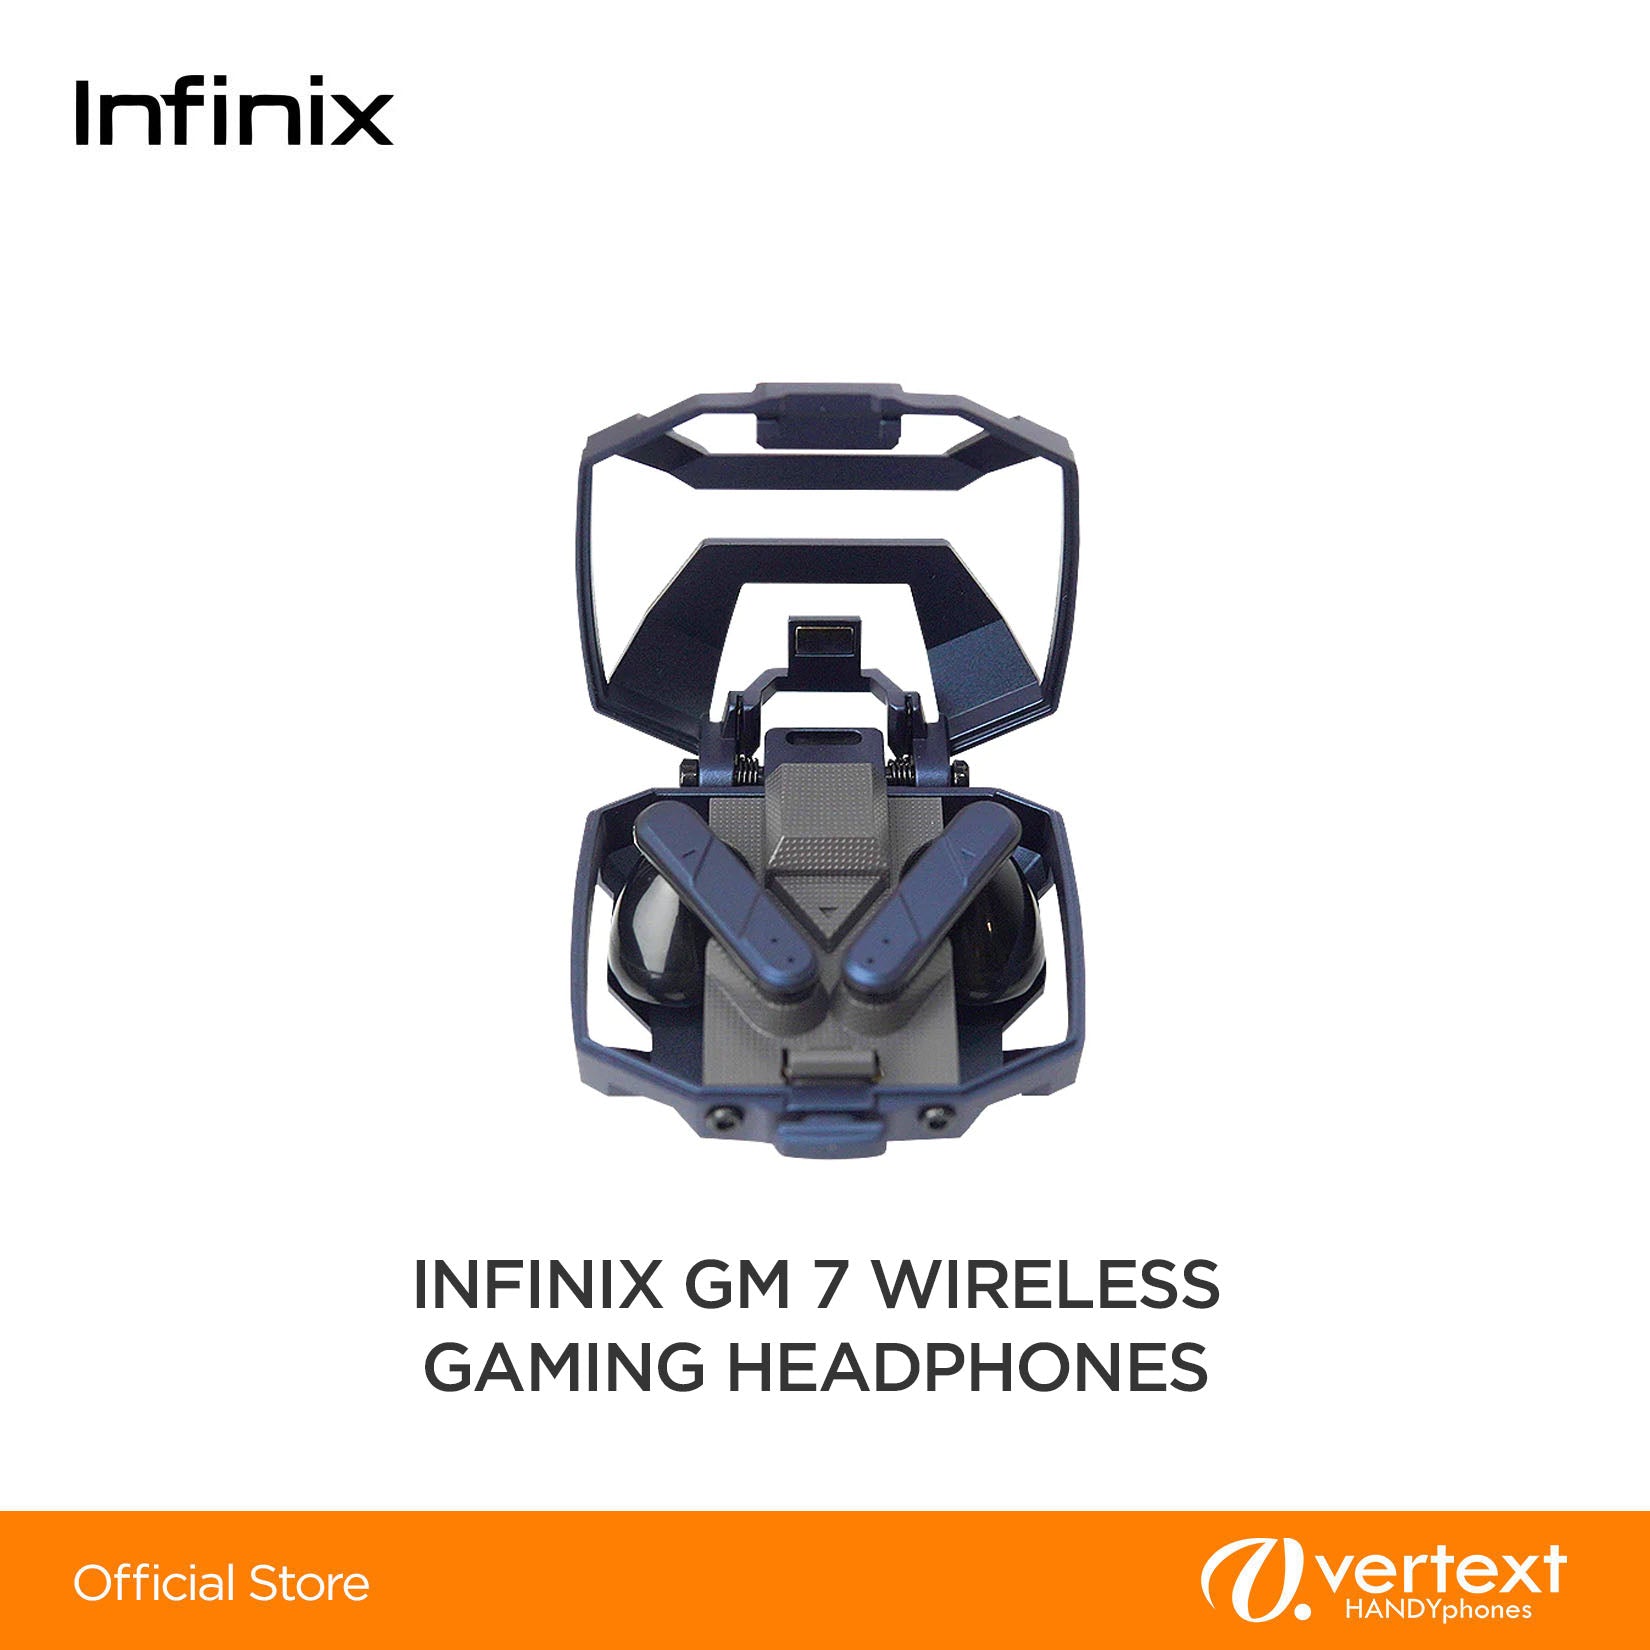 Infinix GM 7 WIRELESS GAMING HEADPHONES